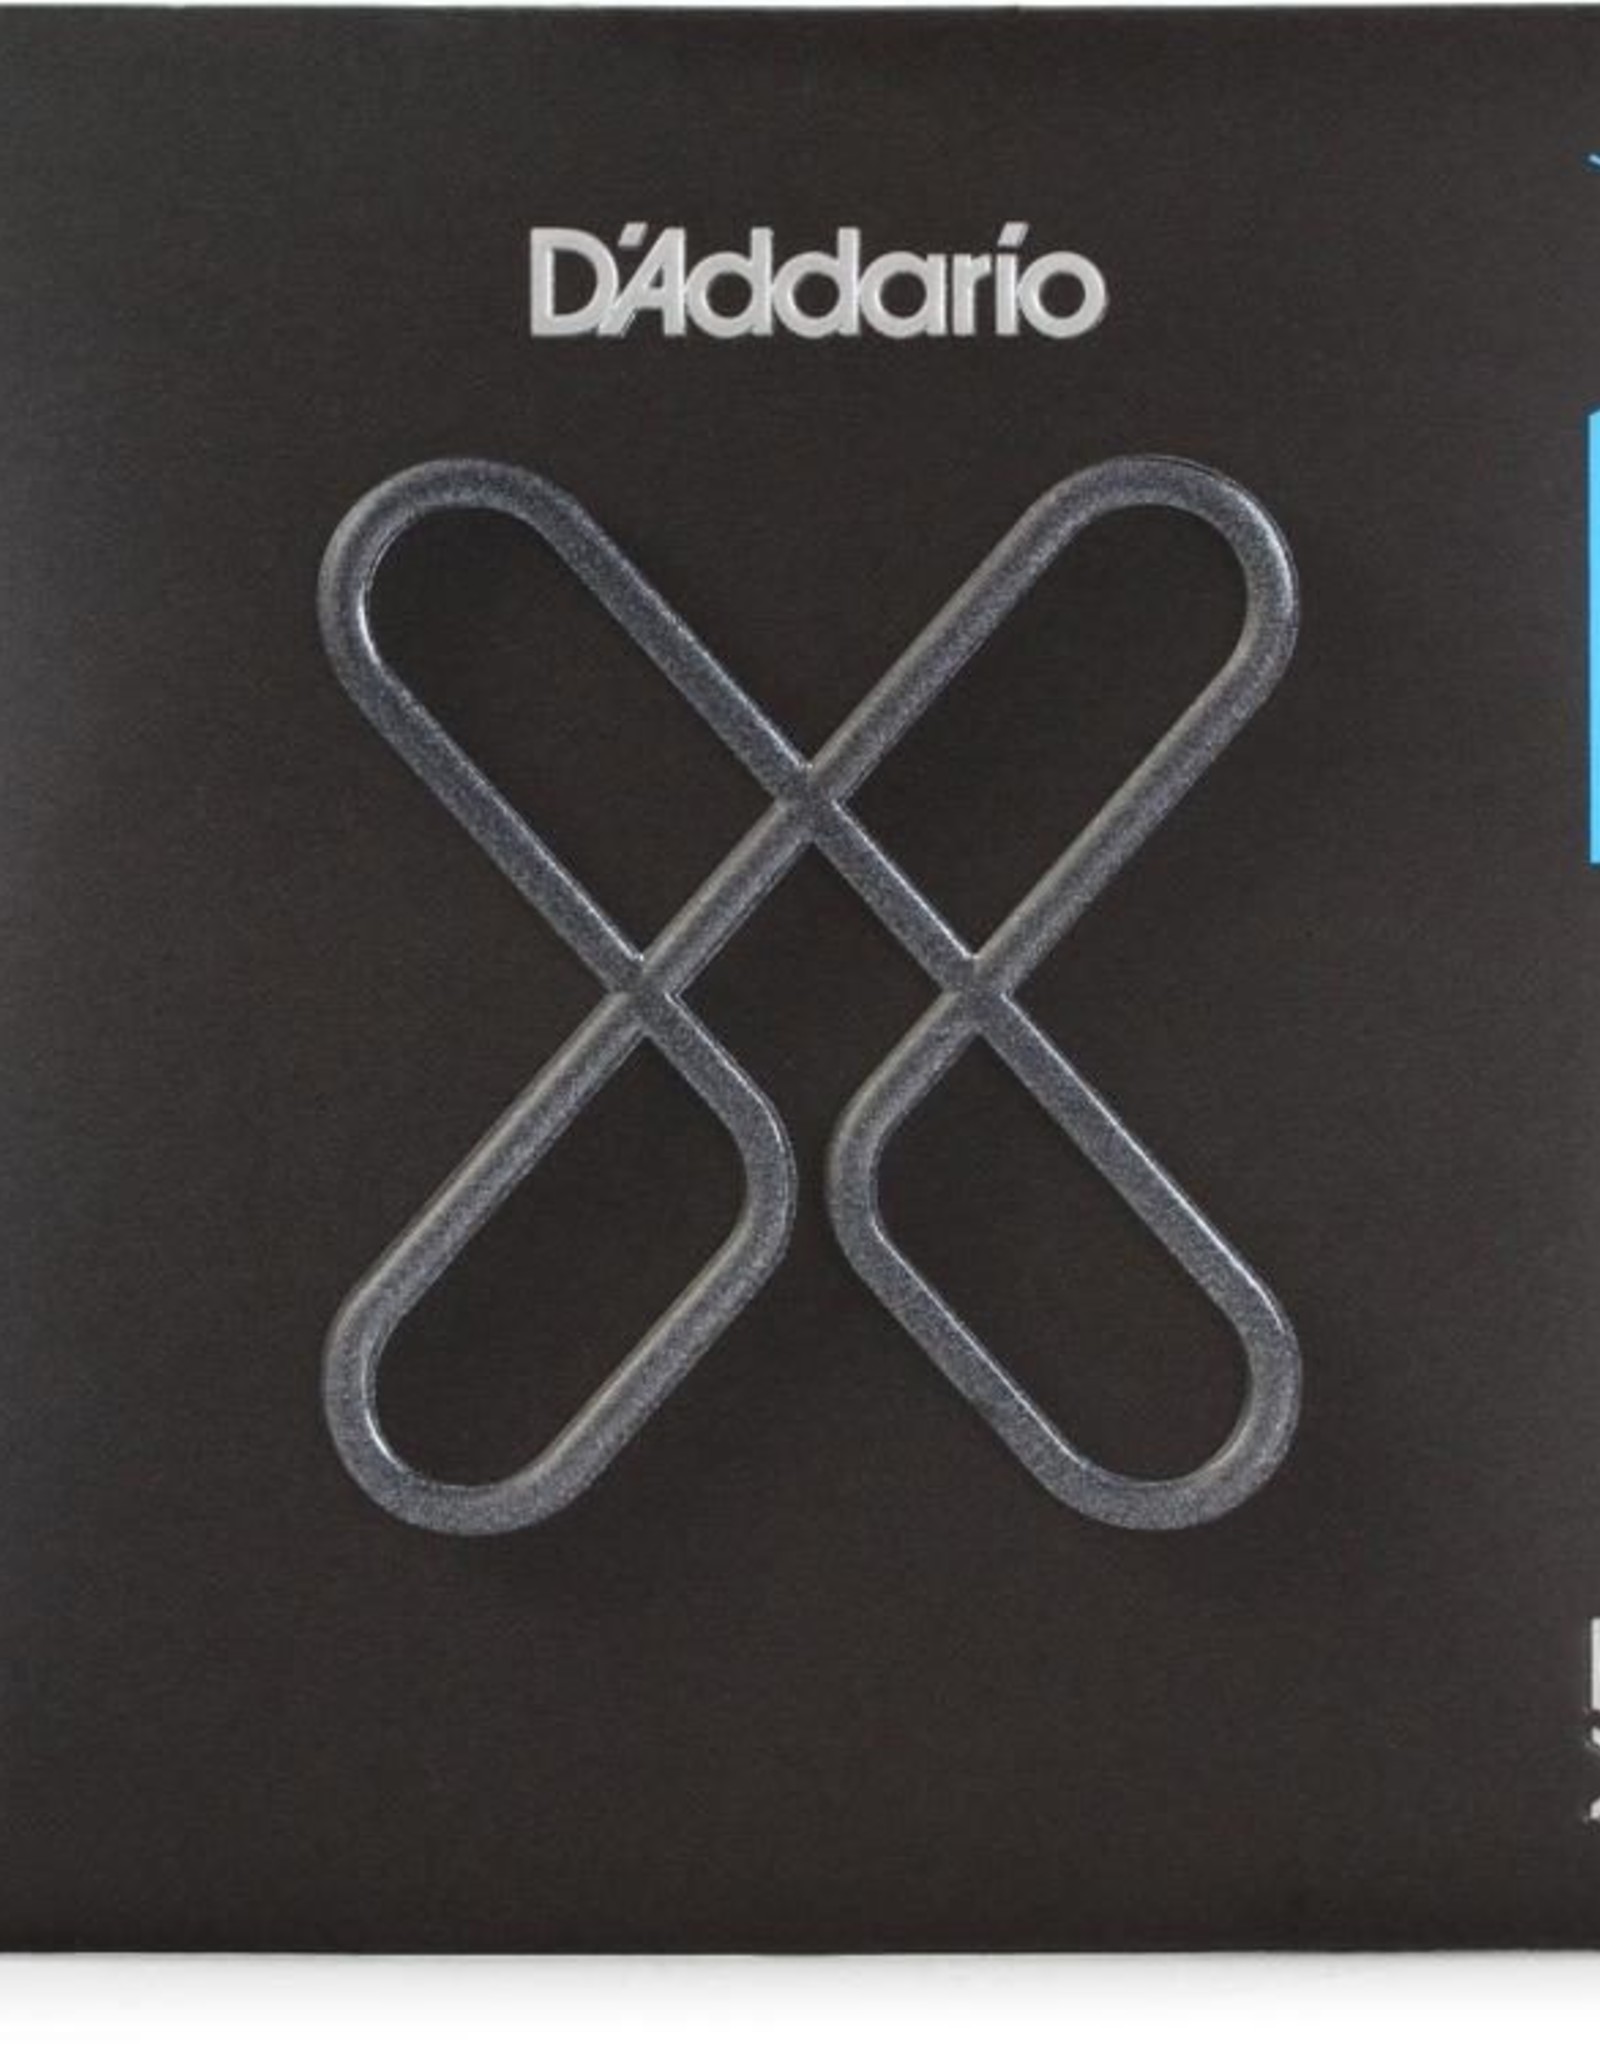 D'Addario D'Addario XT Acoustic Phosphor Bronze, Light, 12-53